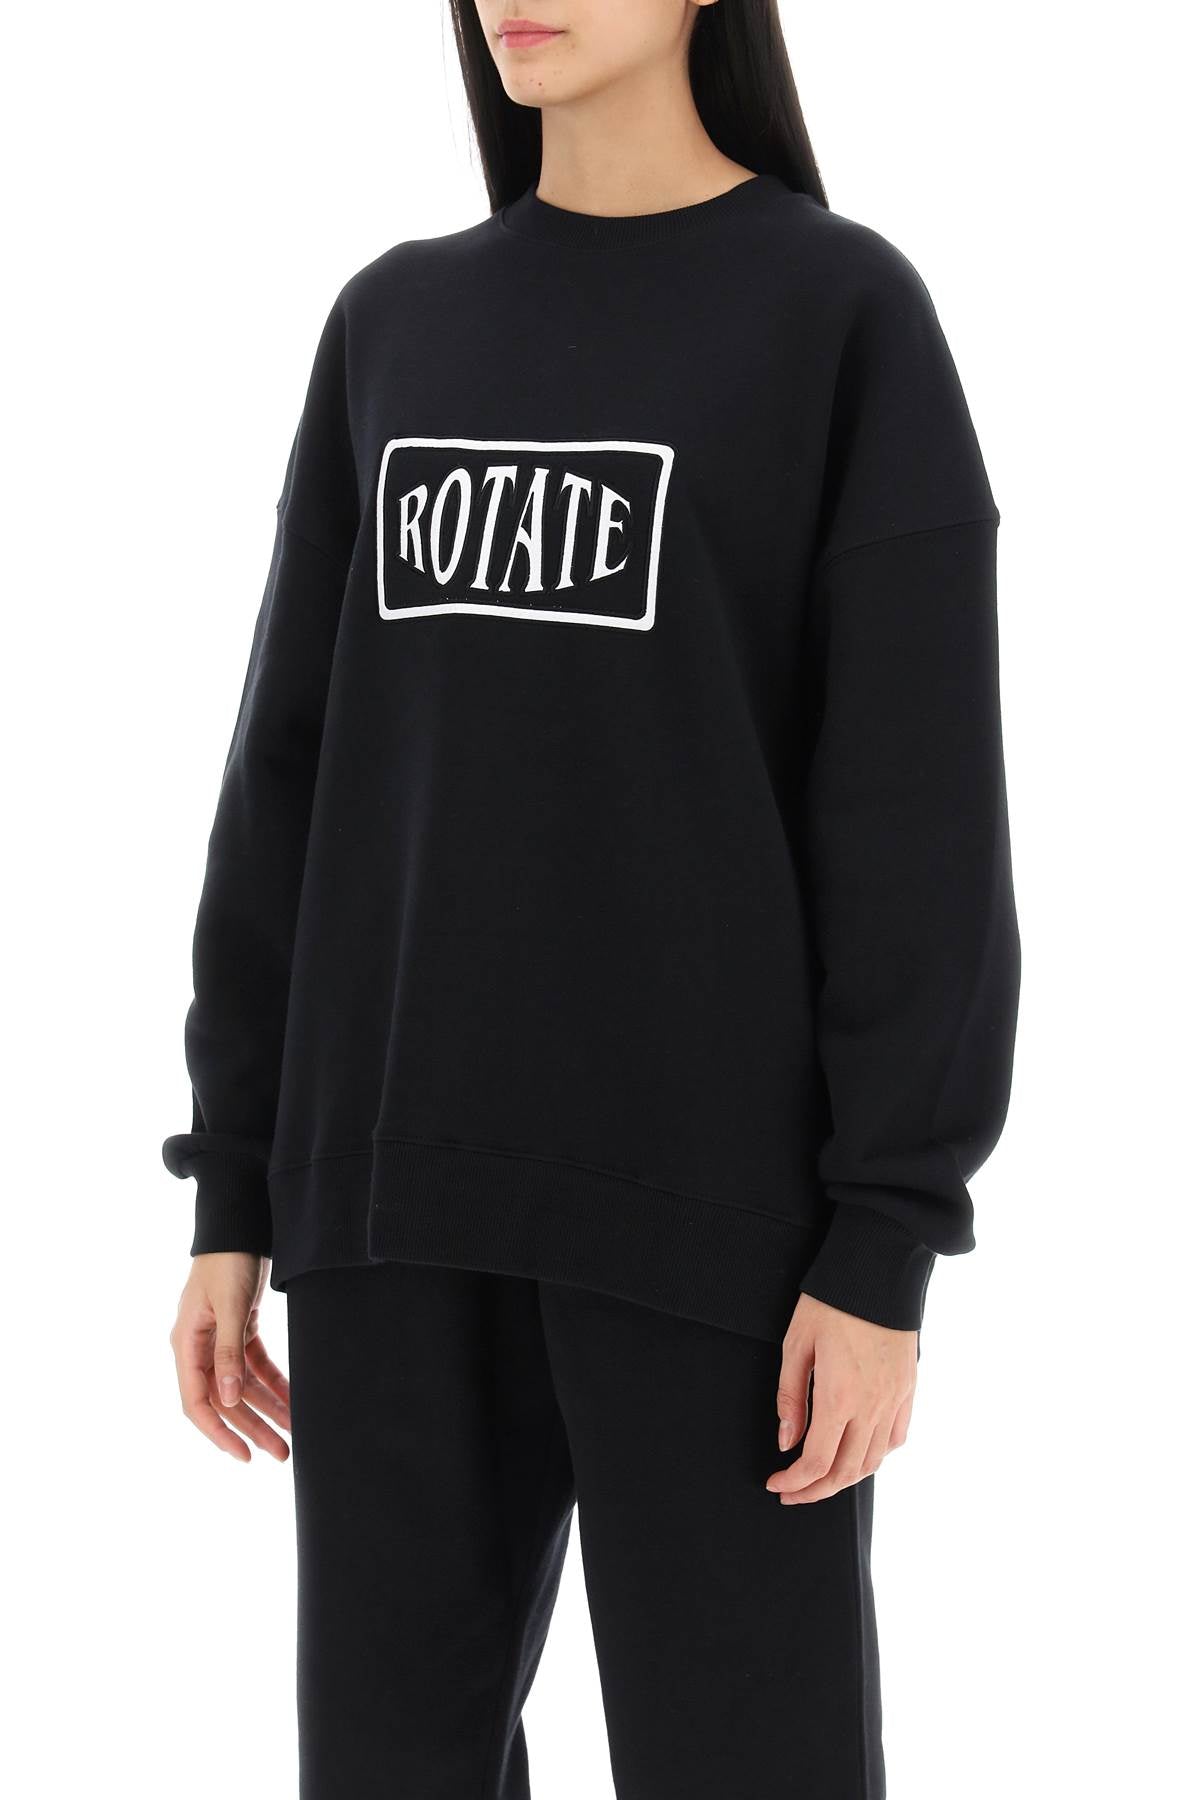 Rotate crew-neck sweatshirt with logo embroidery-3